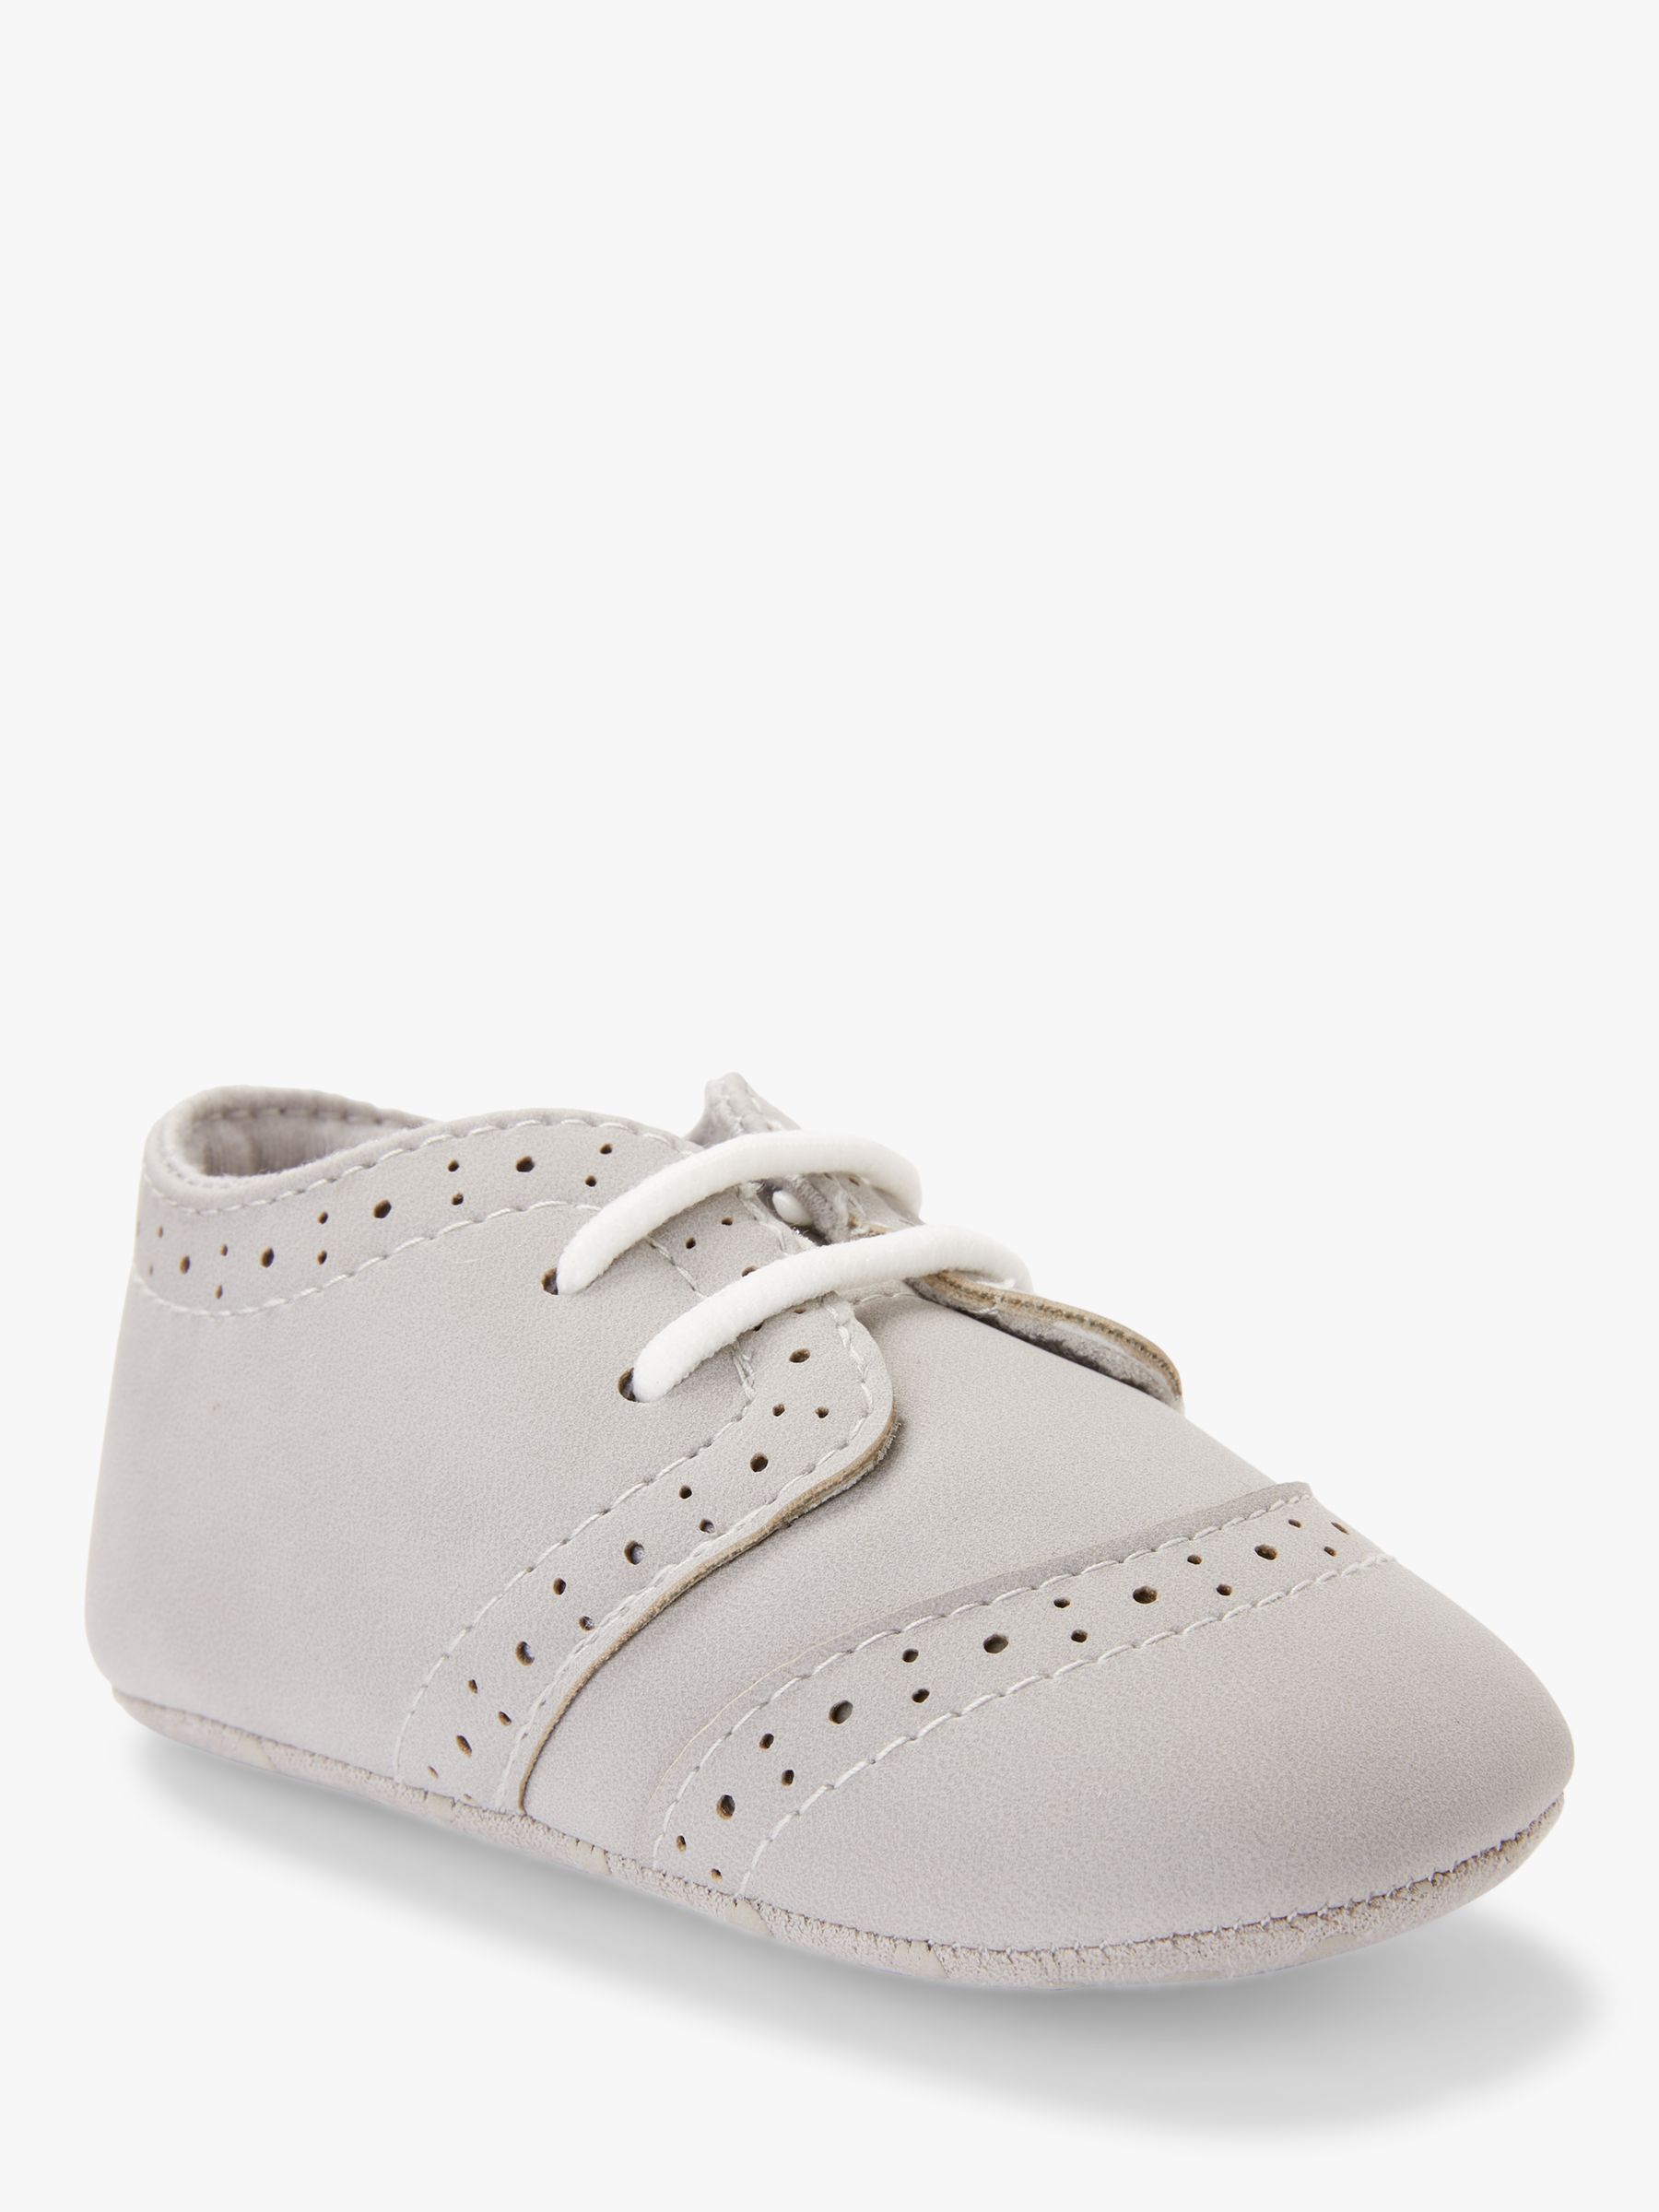 John Lewis & Partners Baby Formal Brogue Shoes, Grey